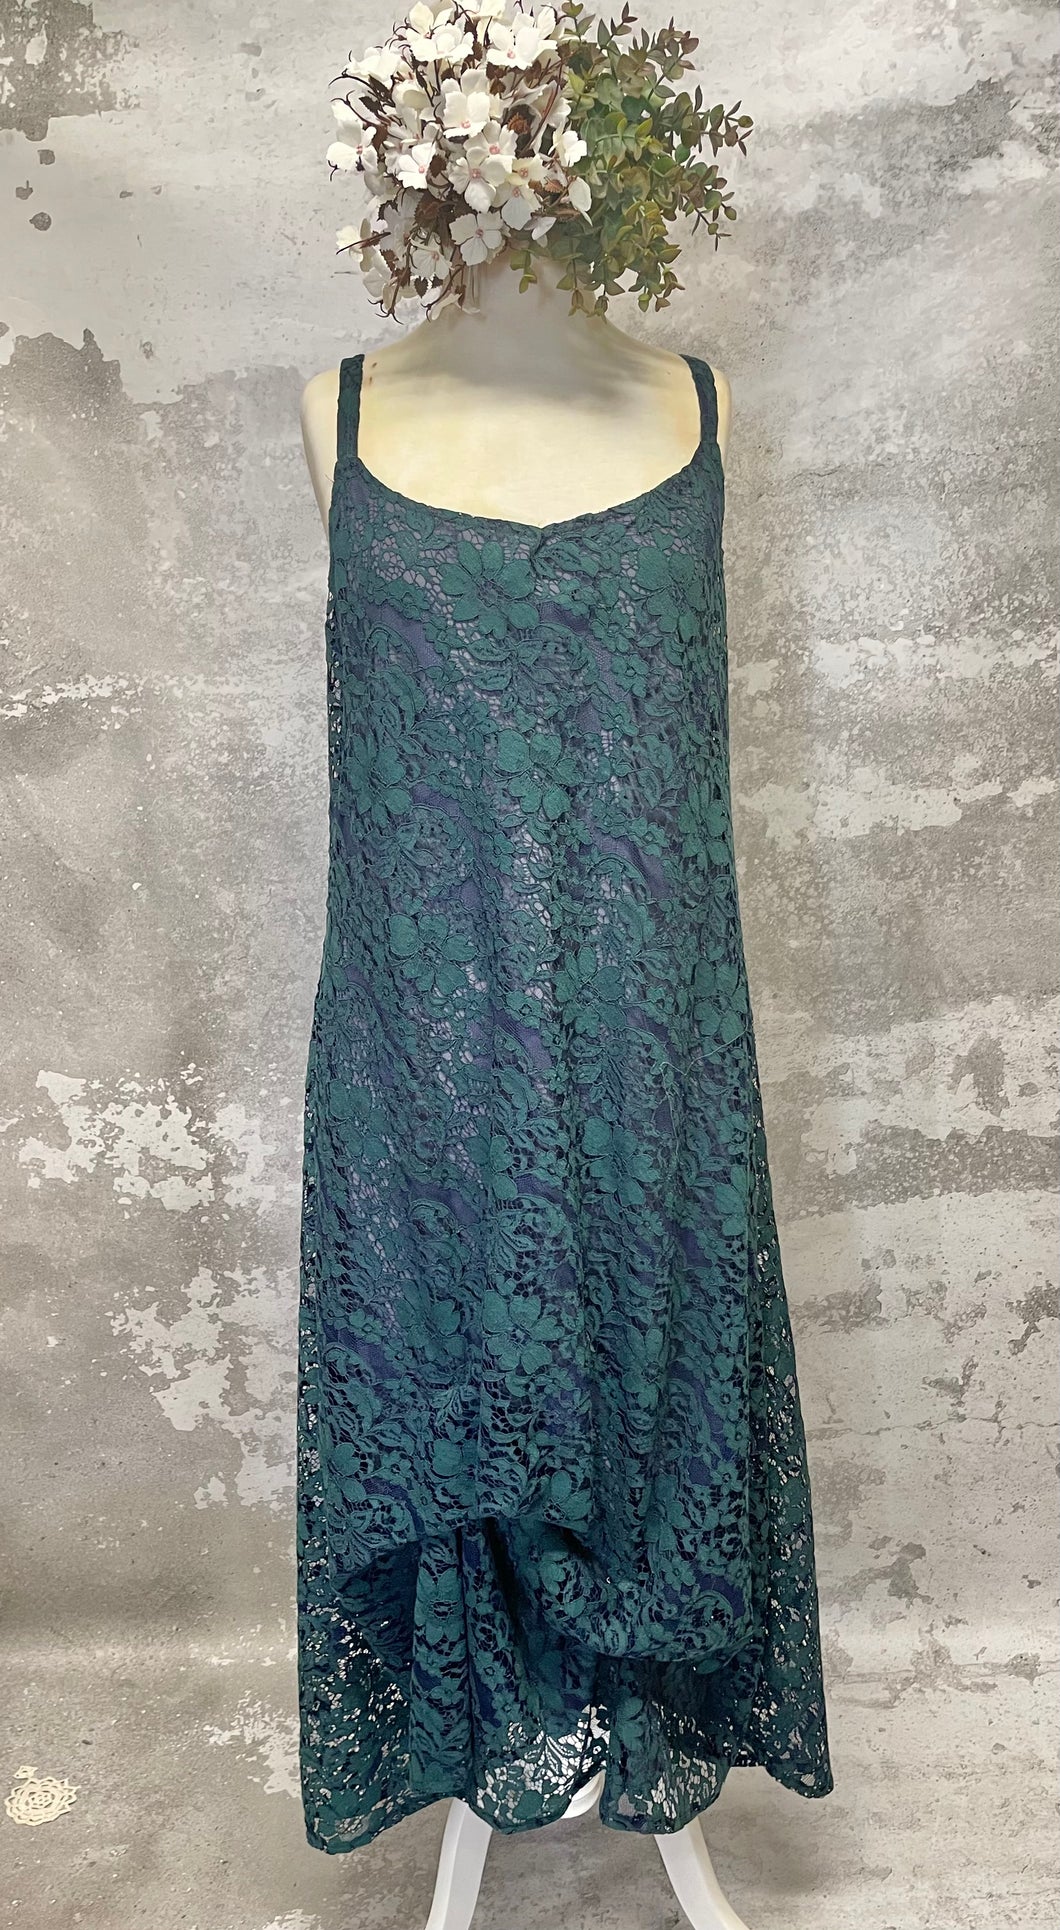 Emerald and Indigo lace slip dress